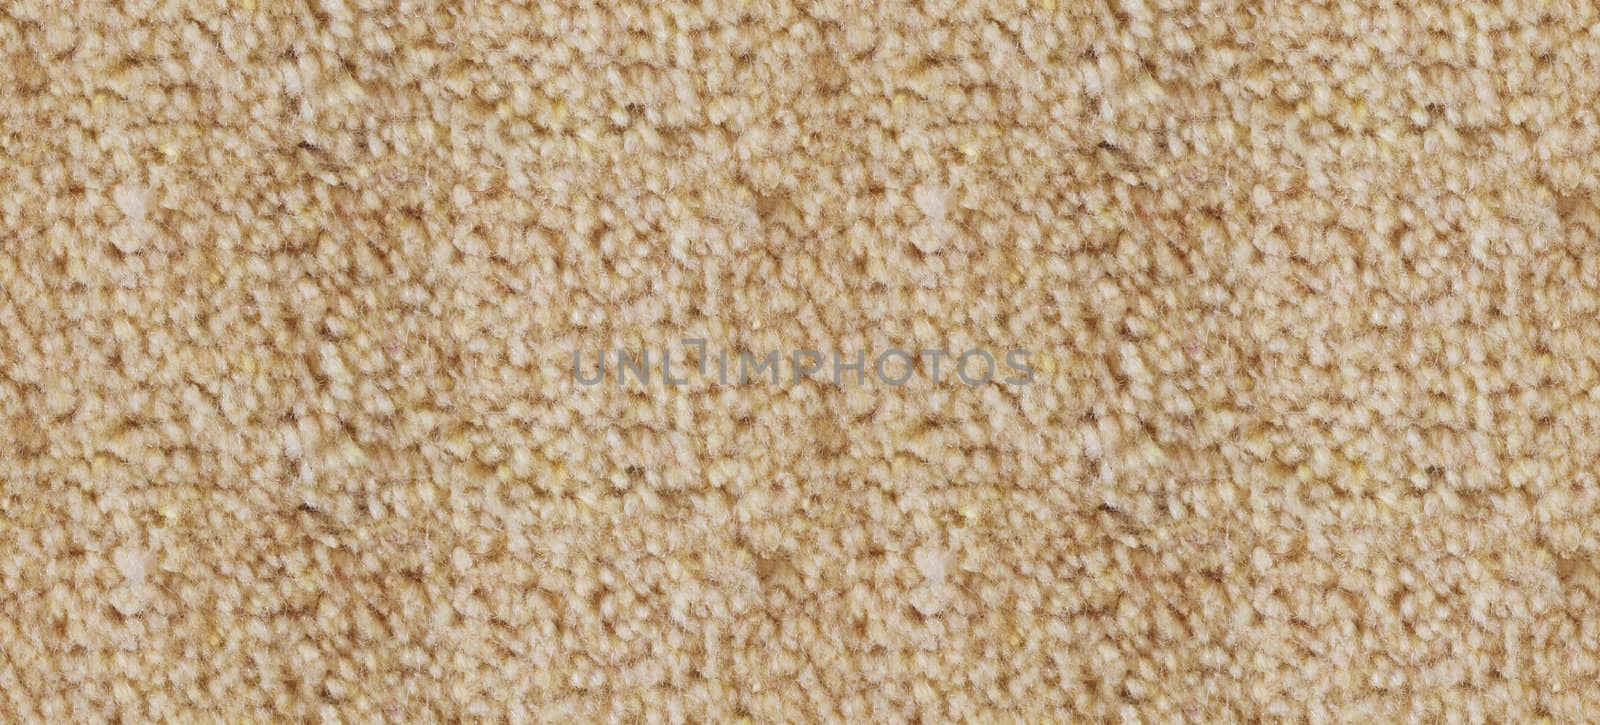 Seamless pattern(texture) of woollen carpet in high resolution